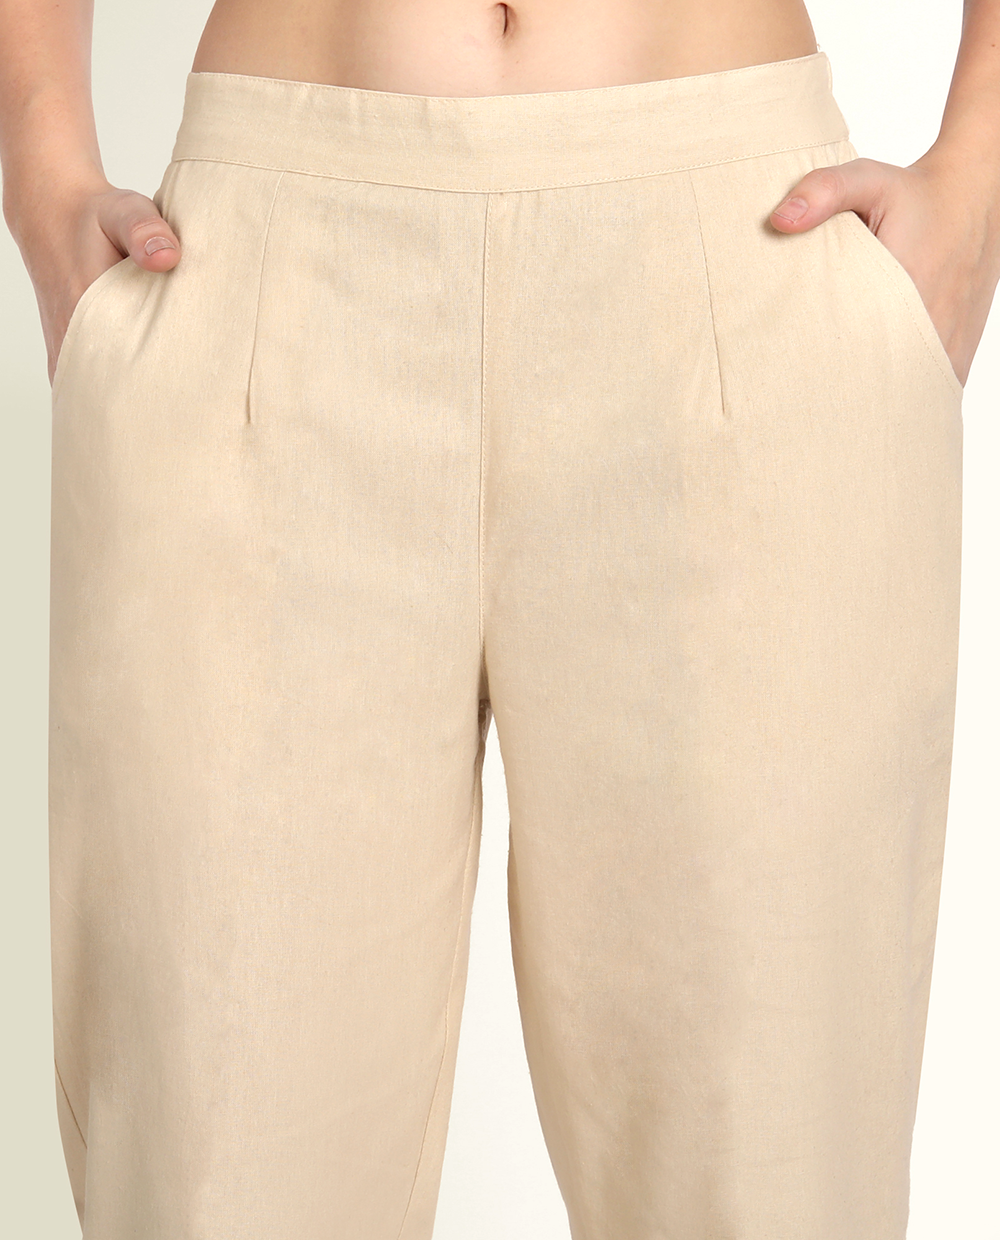 Buy Women Beige Regular Fit Solid Business Casual Trousers Online  233999   Allen Solly